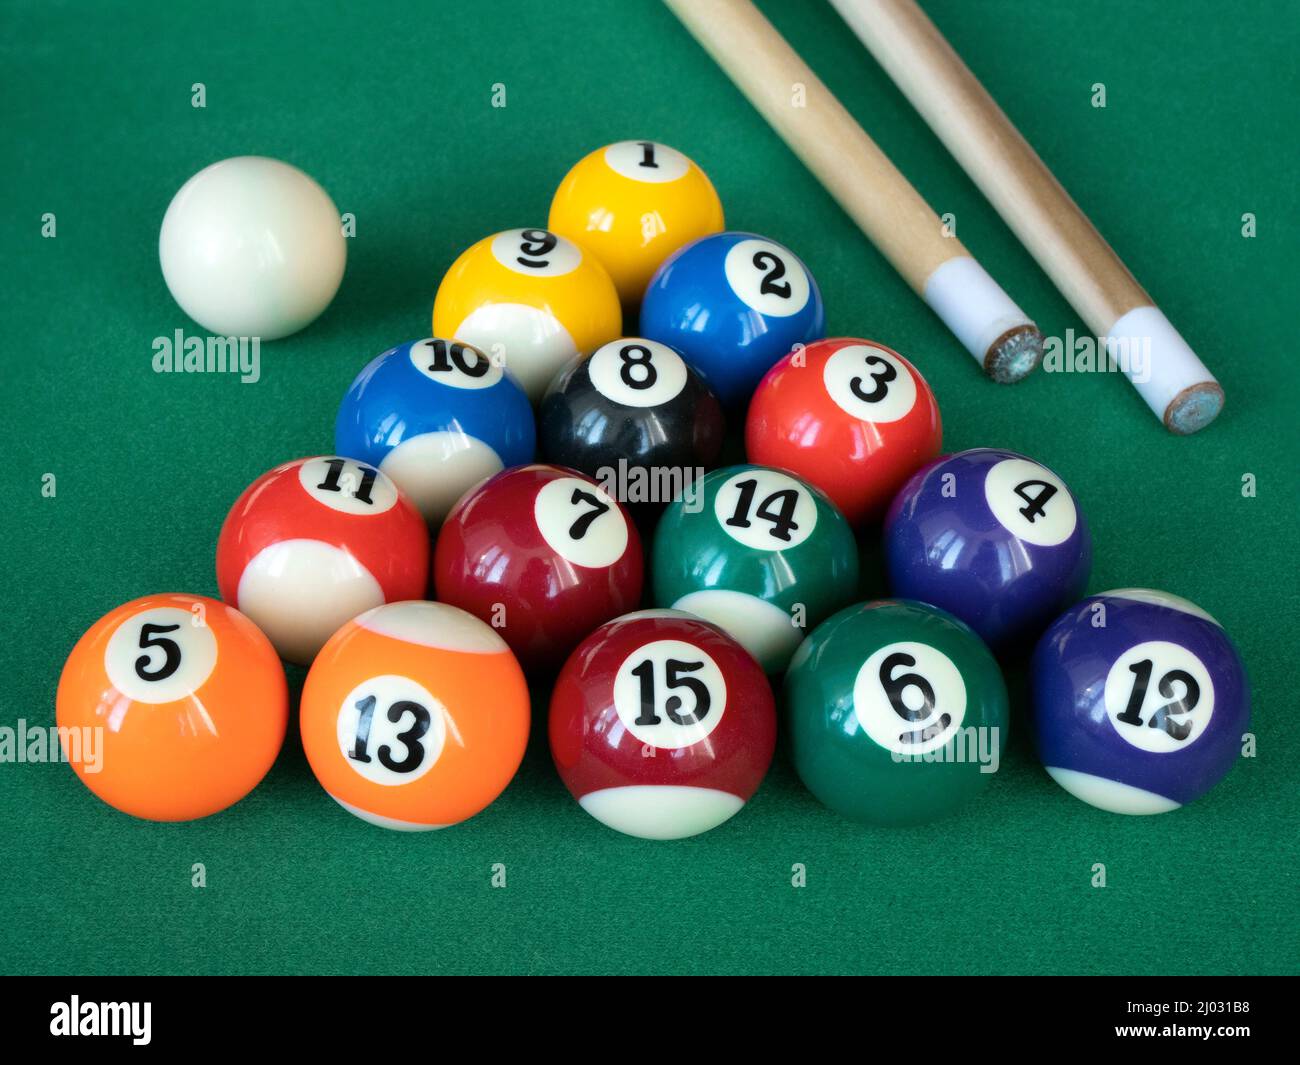 Ball pool kids -Fotos und -Bildmaterial in hoher Auflösung – Alamy